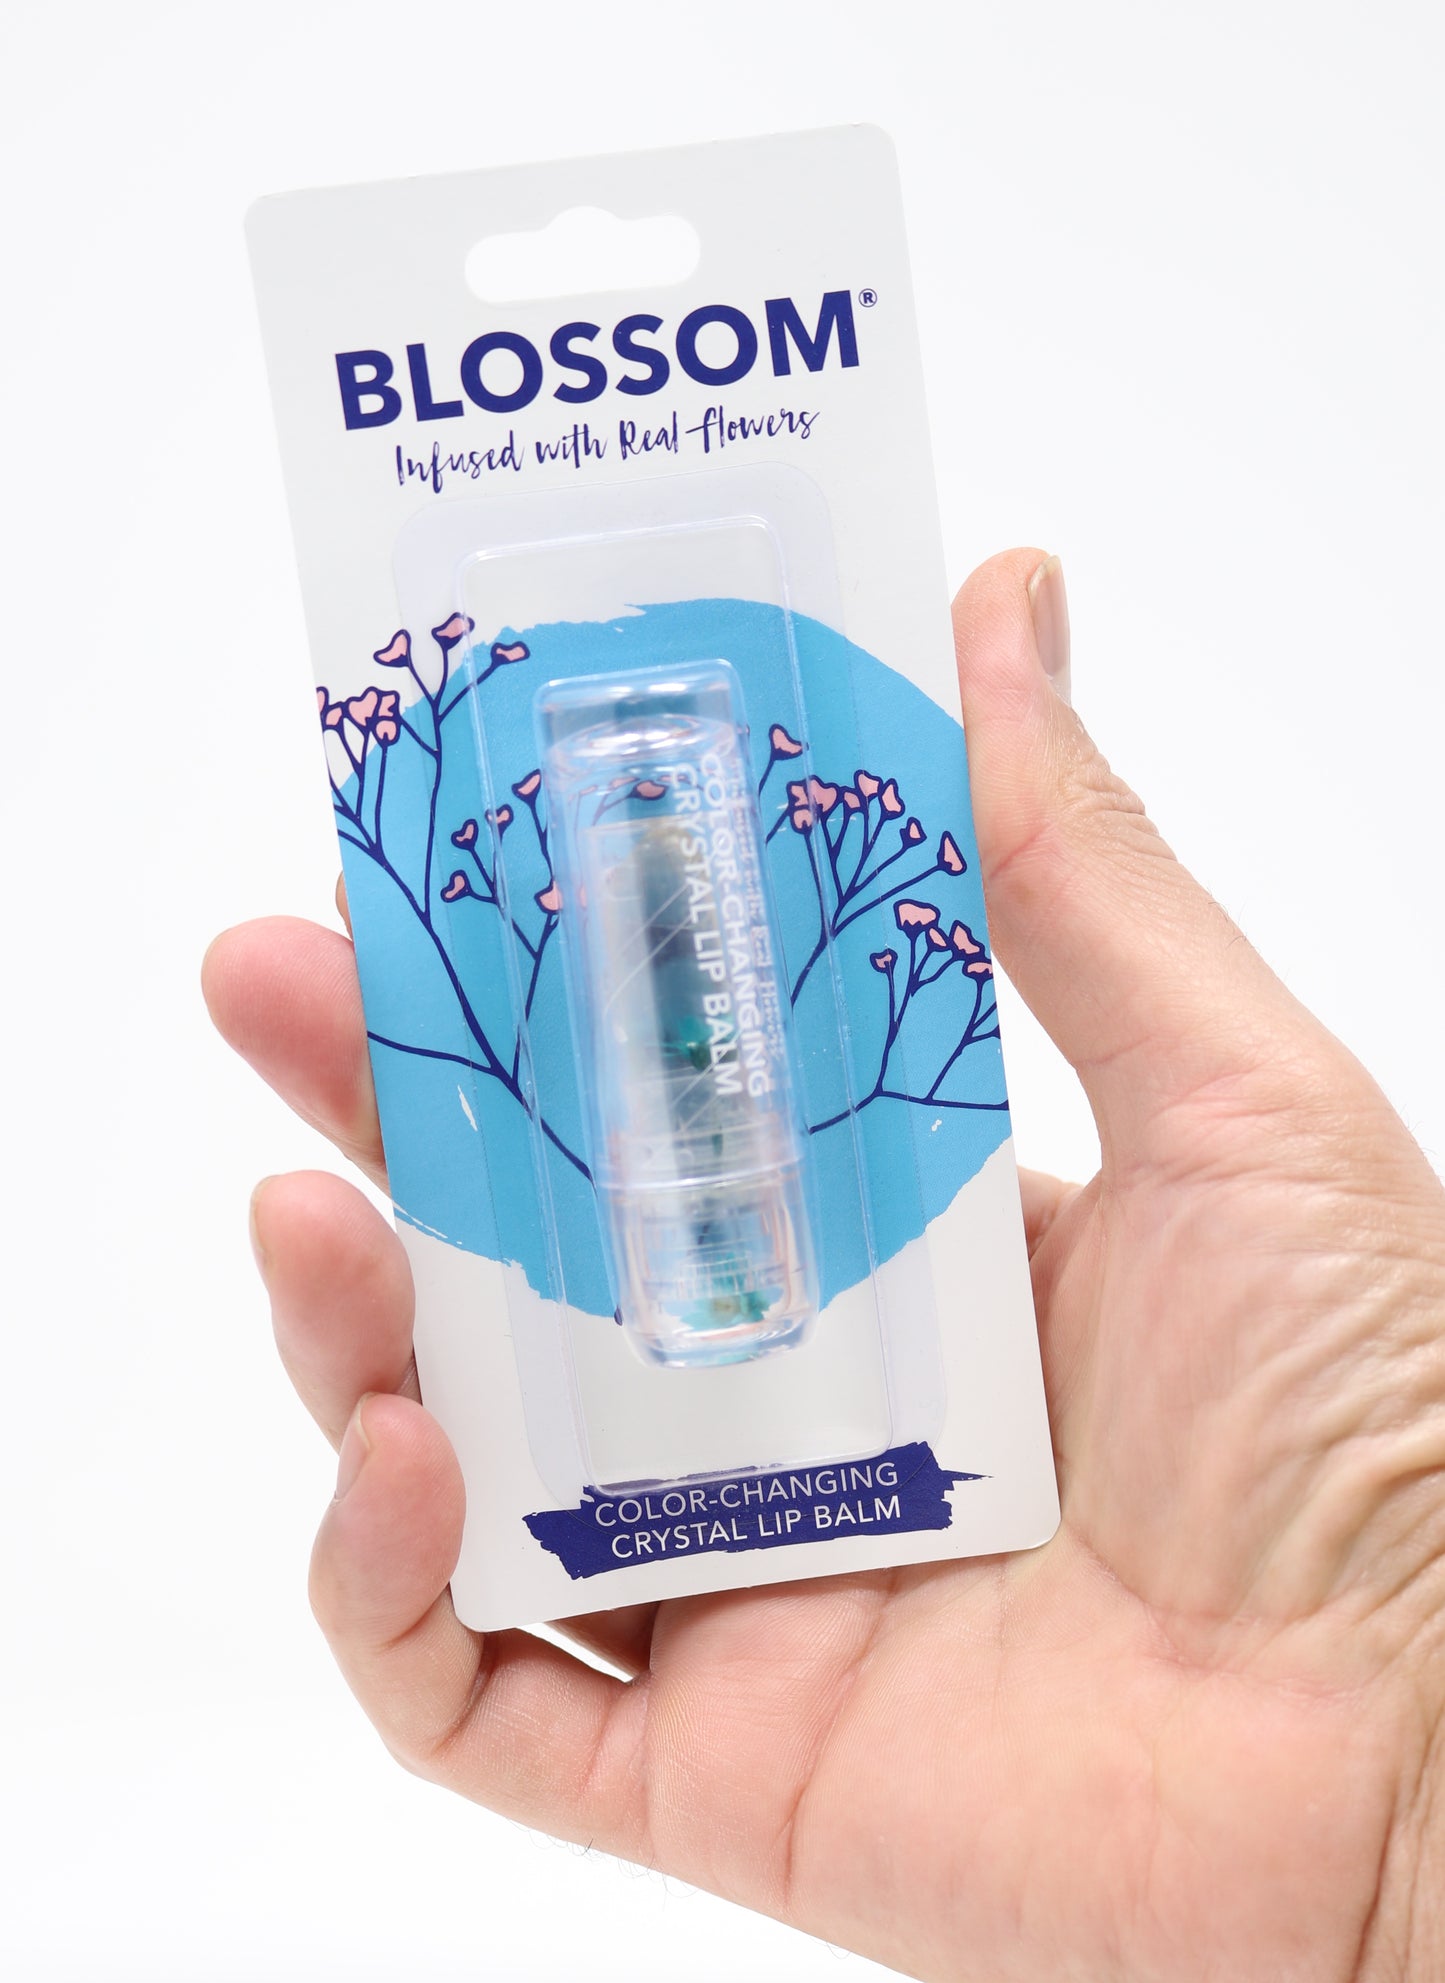 Blossom Color-Changing Crystal Lip Balm, Moisturizing Lip Gloss Tube, Roll-On Lip Gloss 2 Pc.